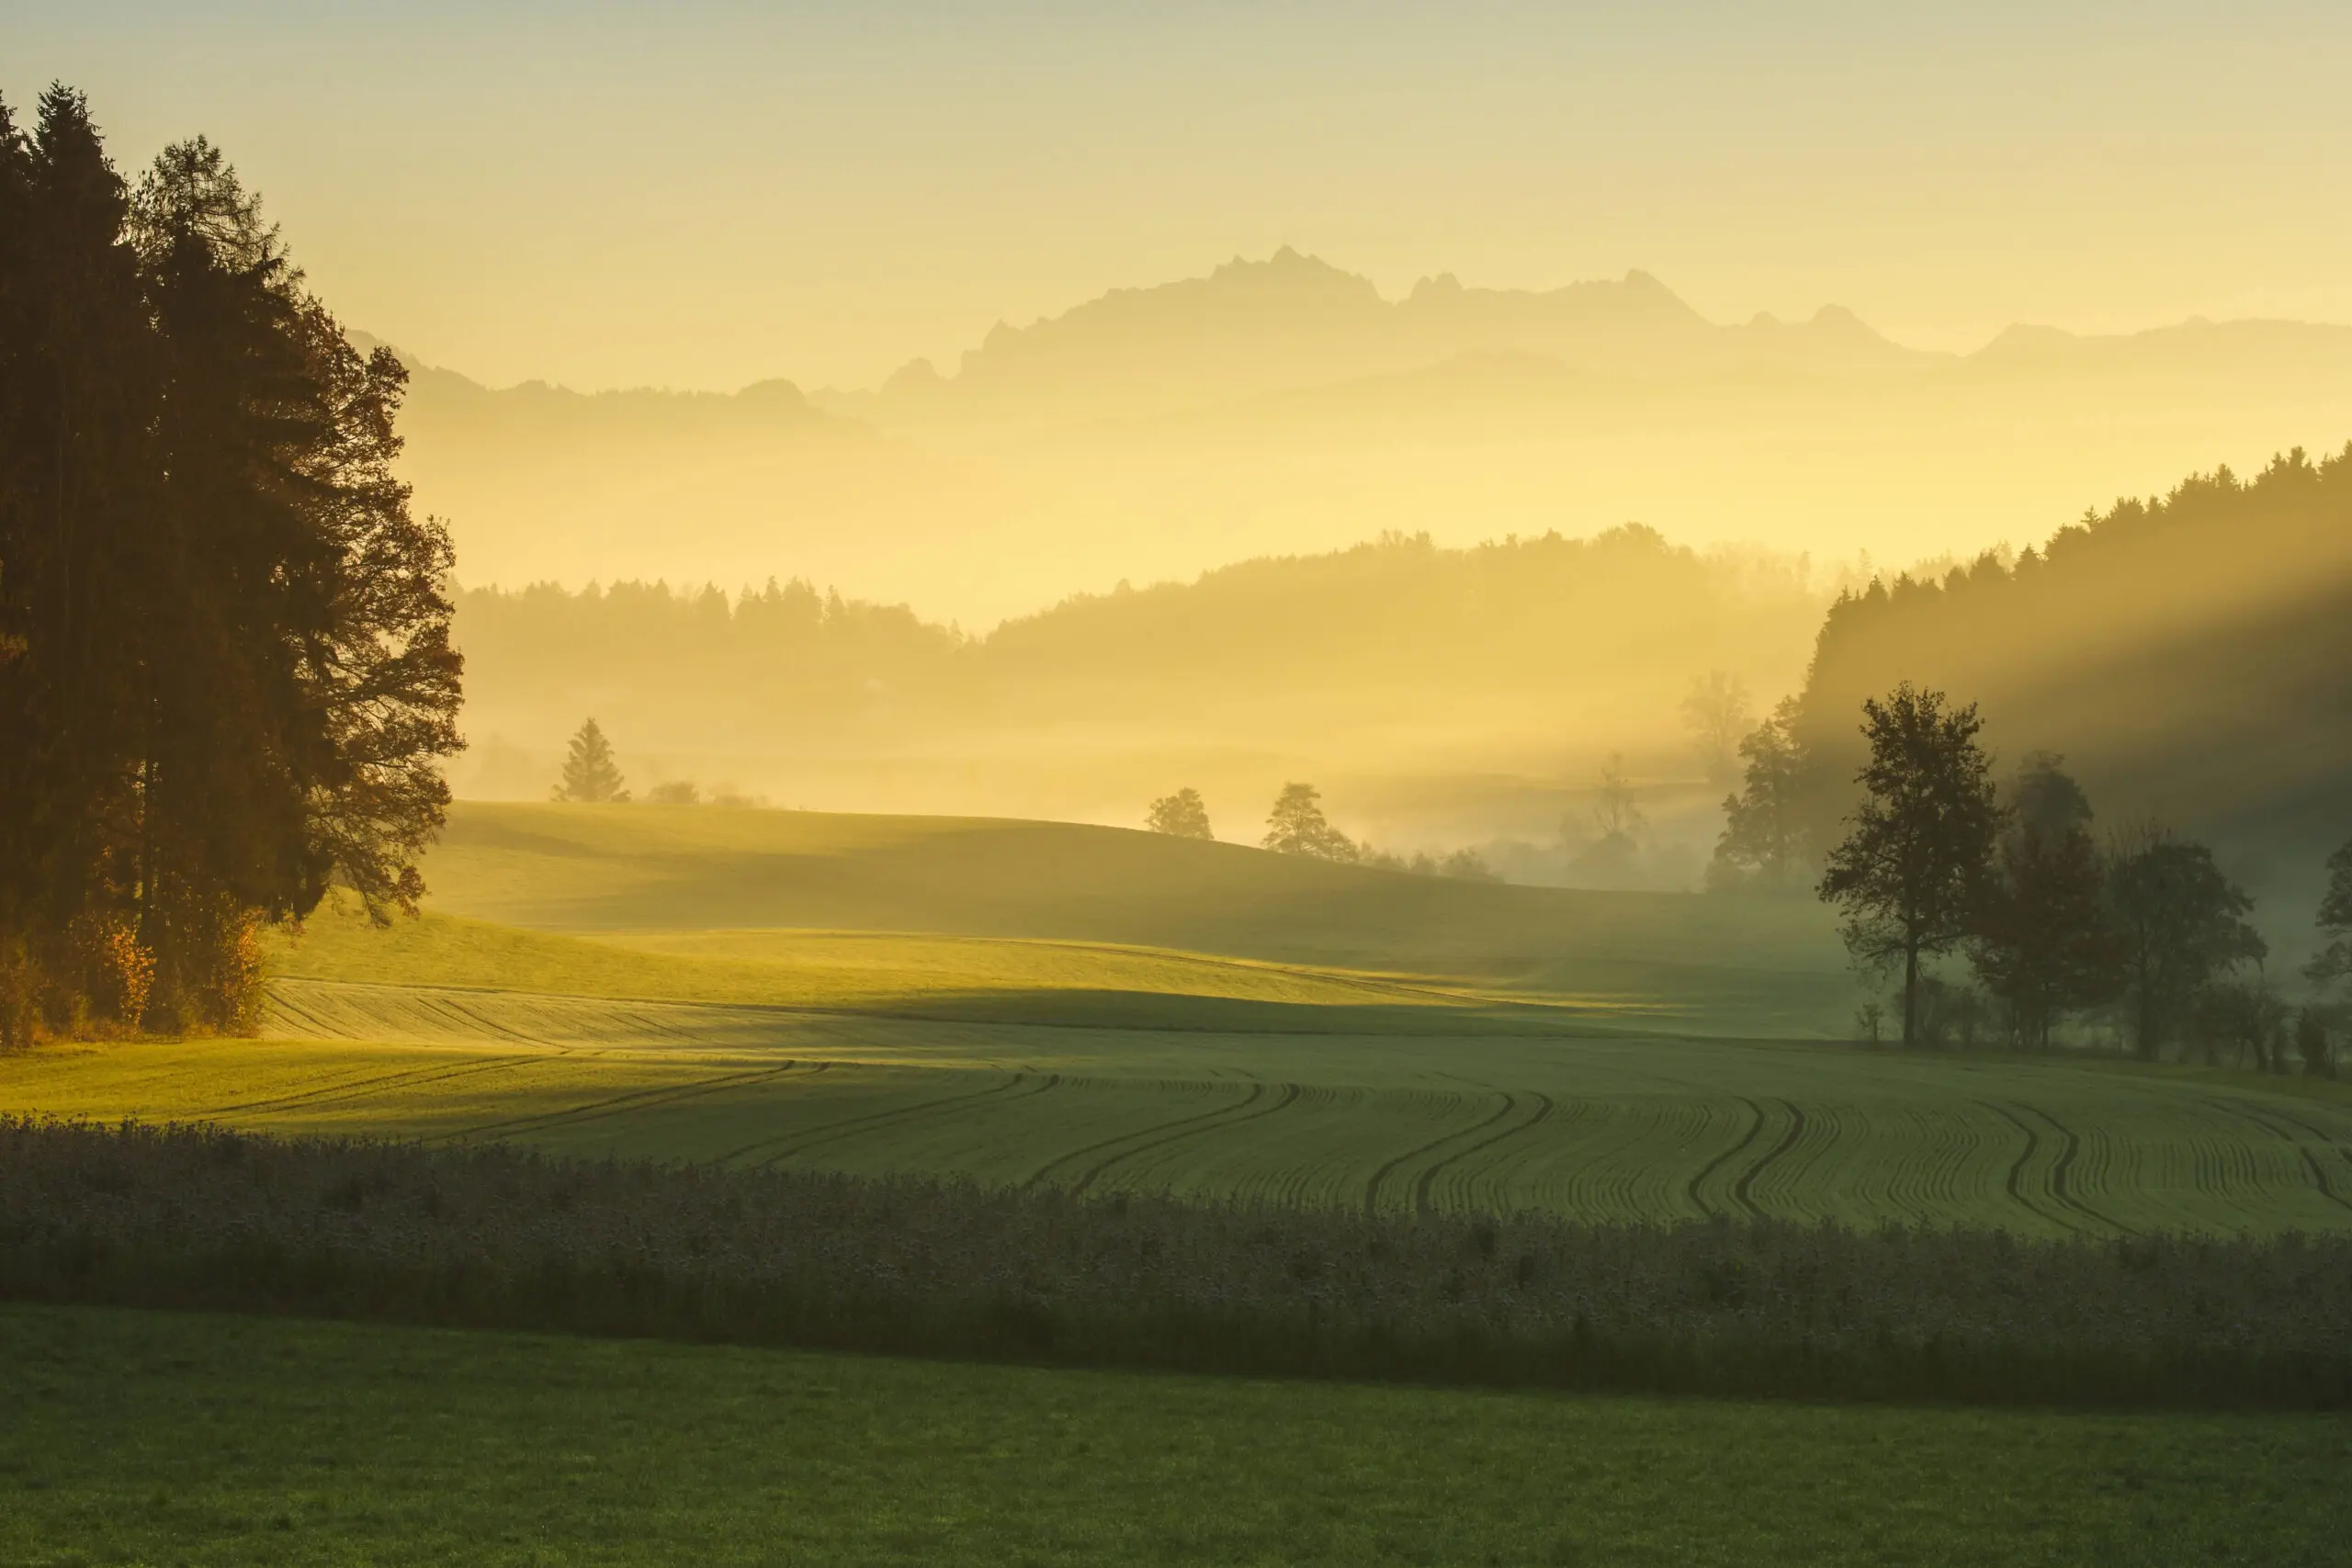 Wandbild (5461) Morning by picture alliance / Prisma präsentiert: Landschaften,Herbst